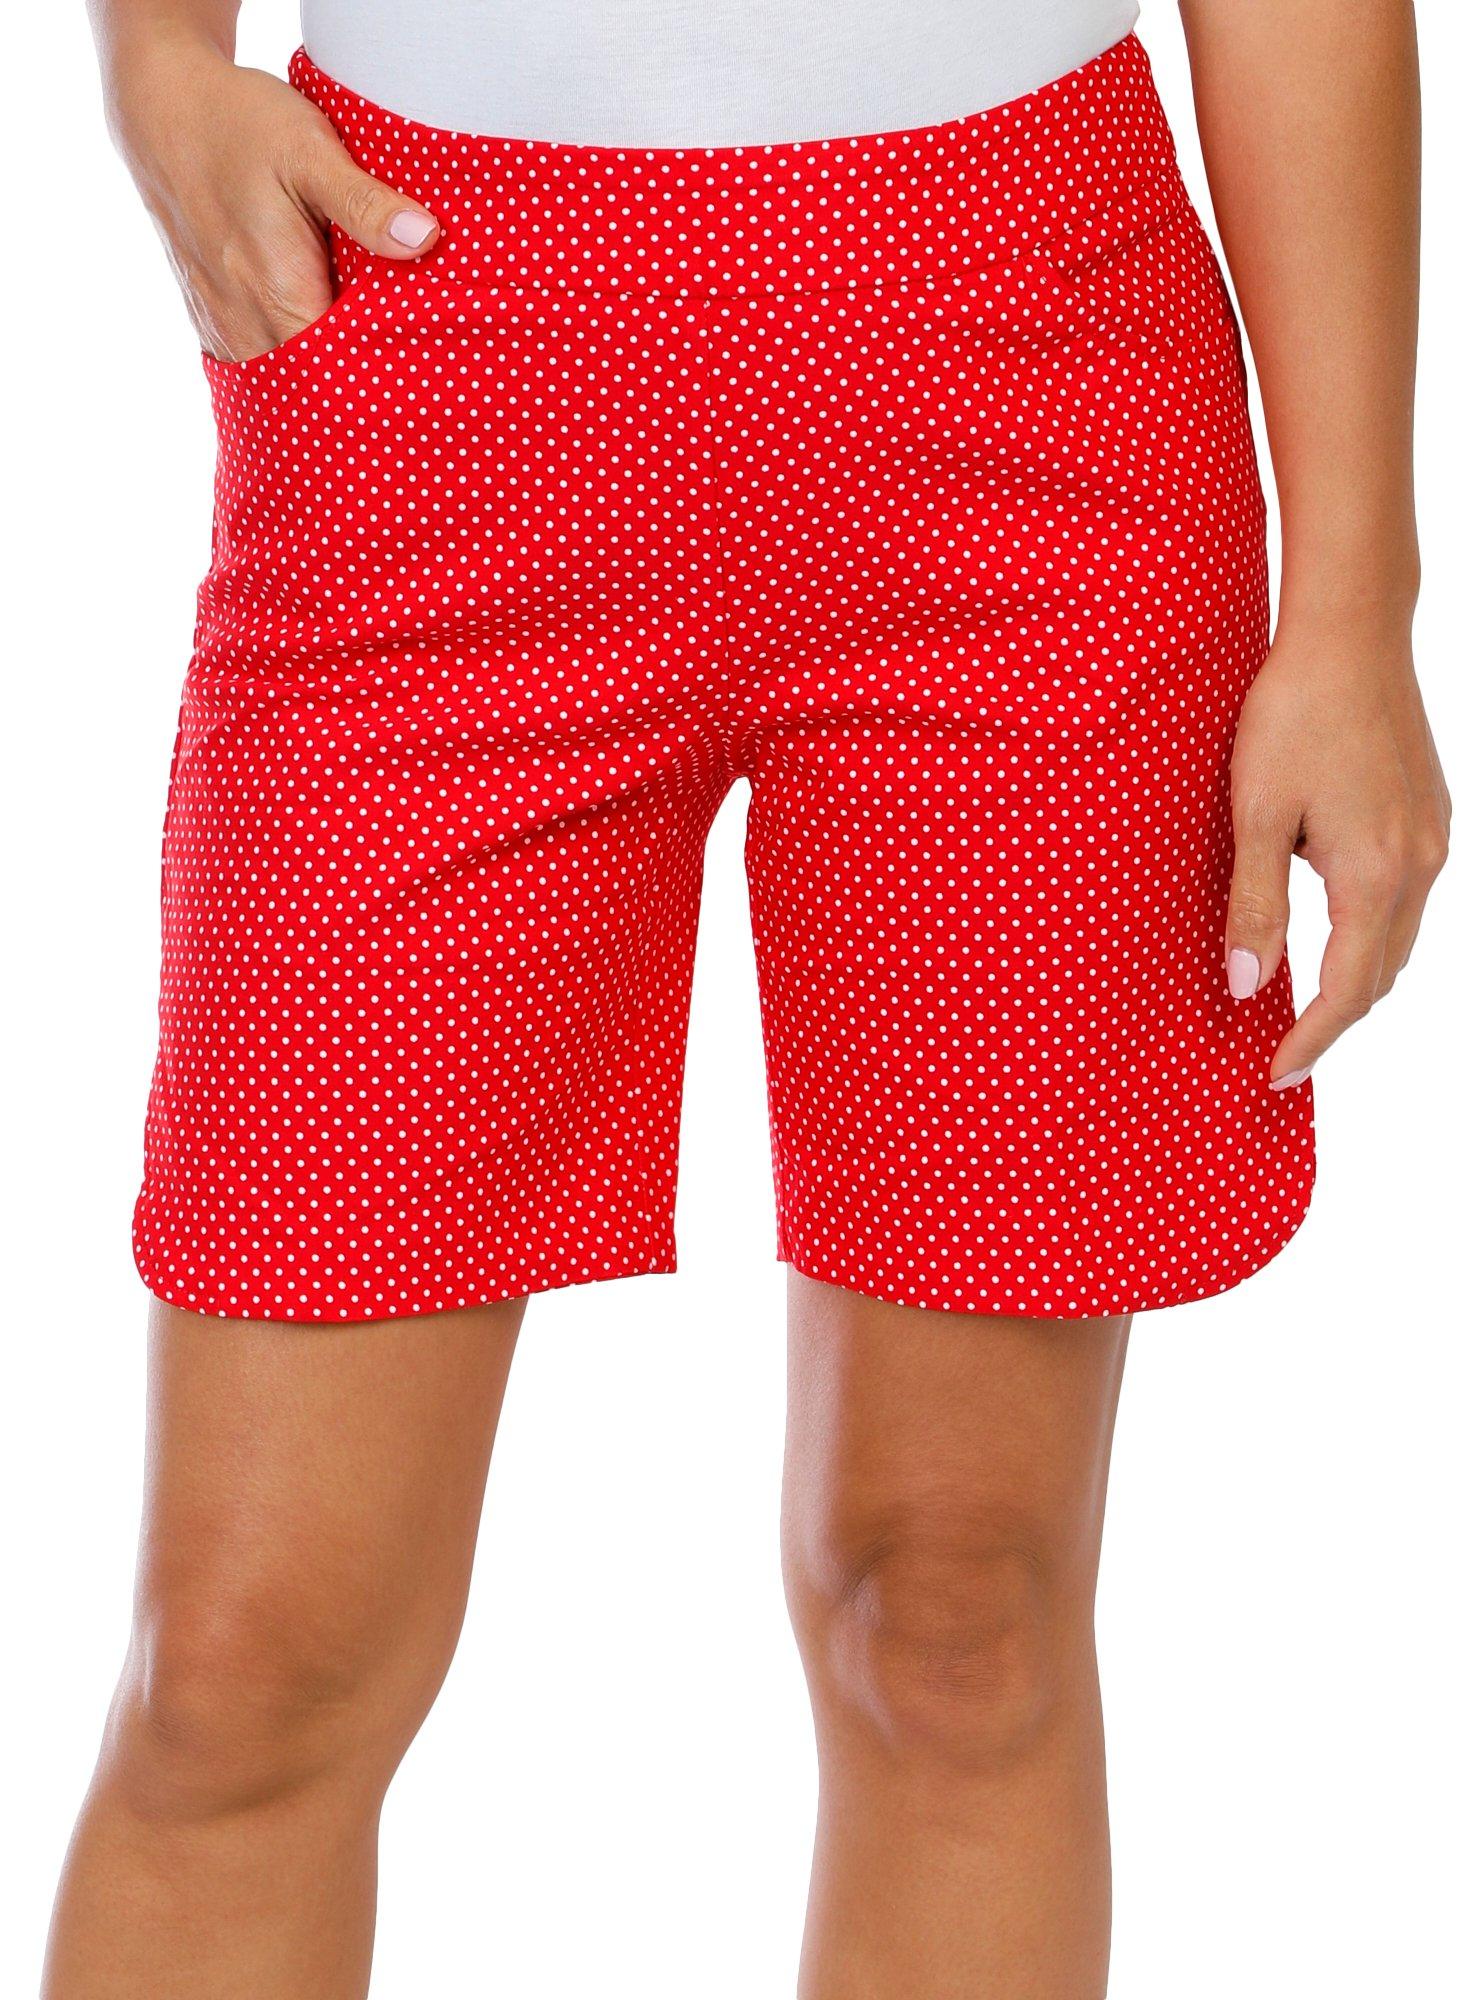 Women's Petite Polka Dot Bermuda Shorts